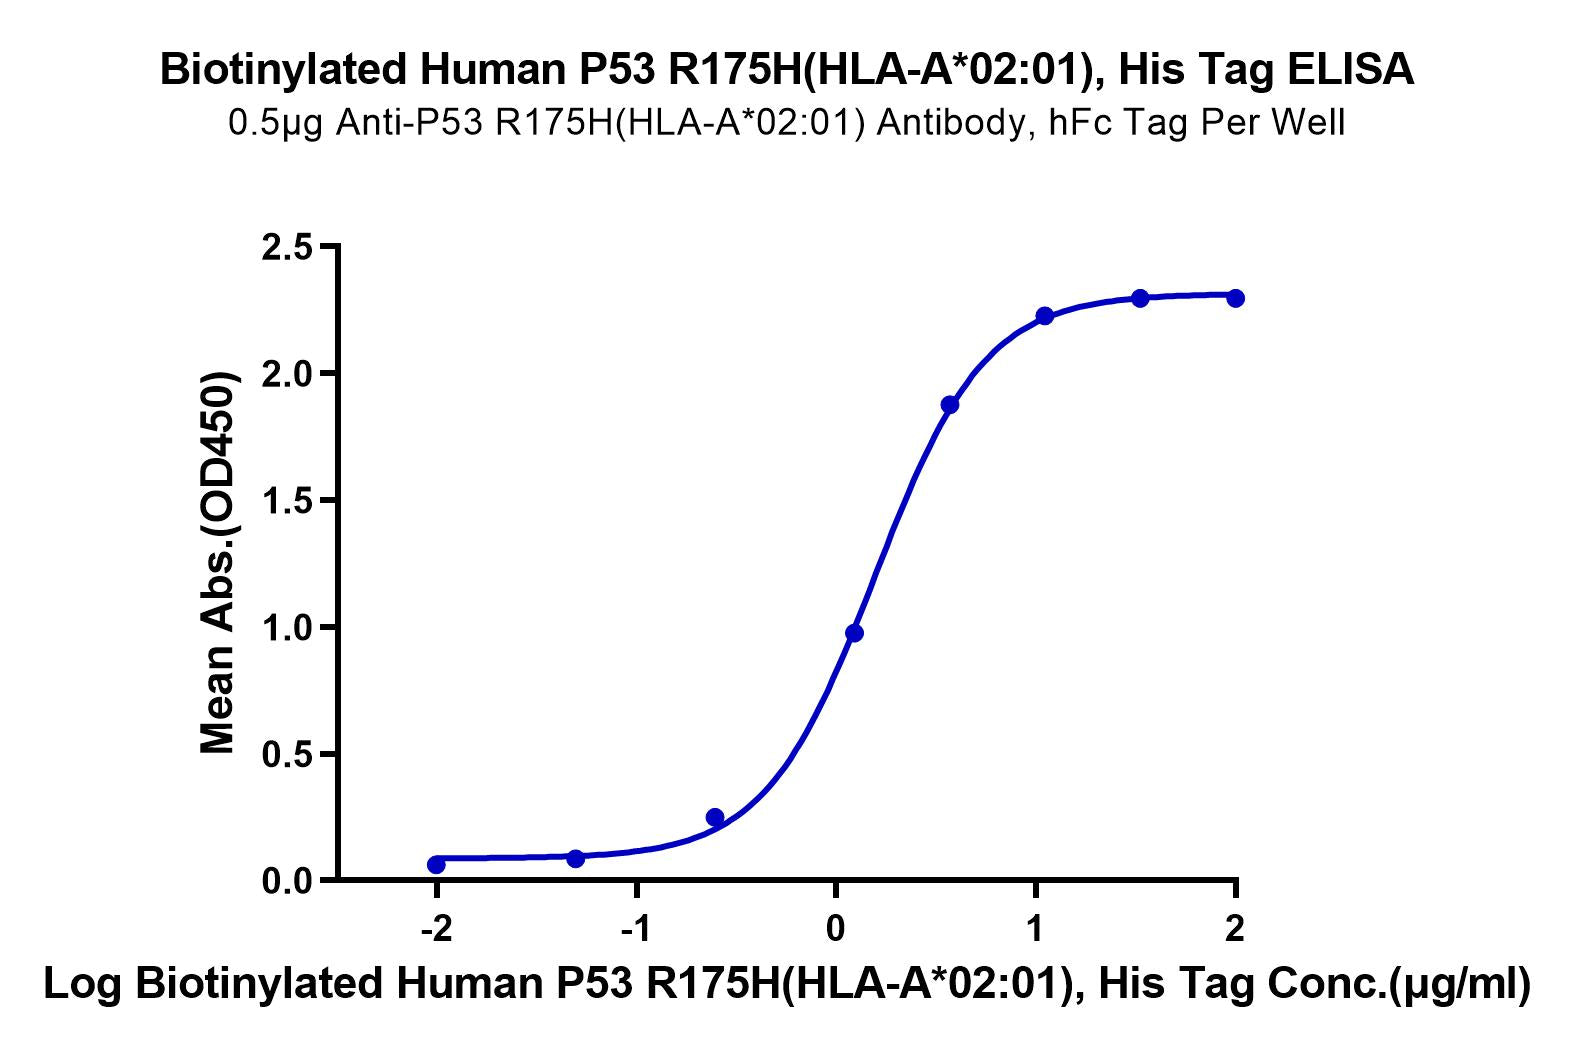 Biotinylated Human HLA-A*02:01&B2M&P53 R175H (HMTEVVRHC) Monomer Protein (MHC-HM415B)